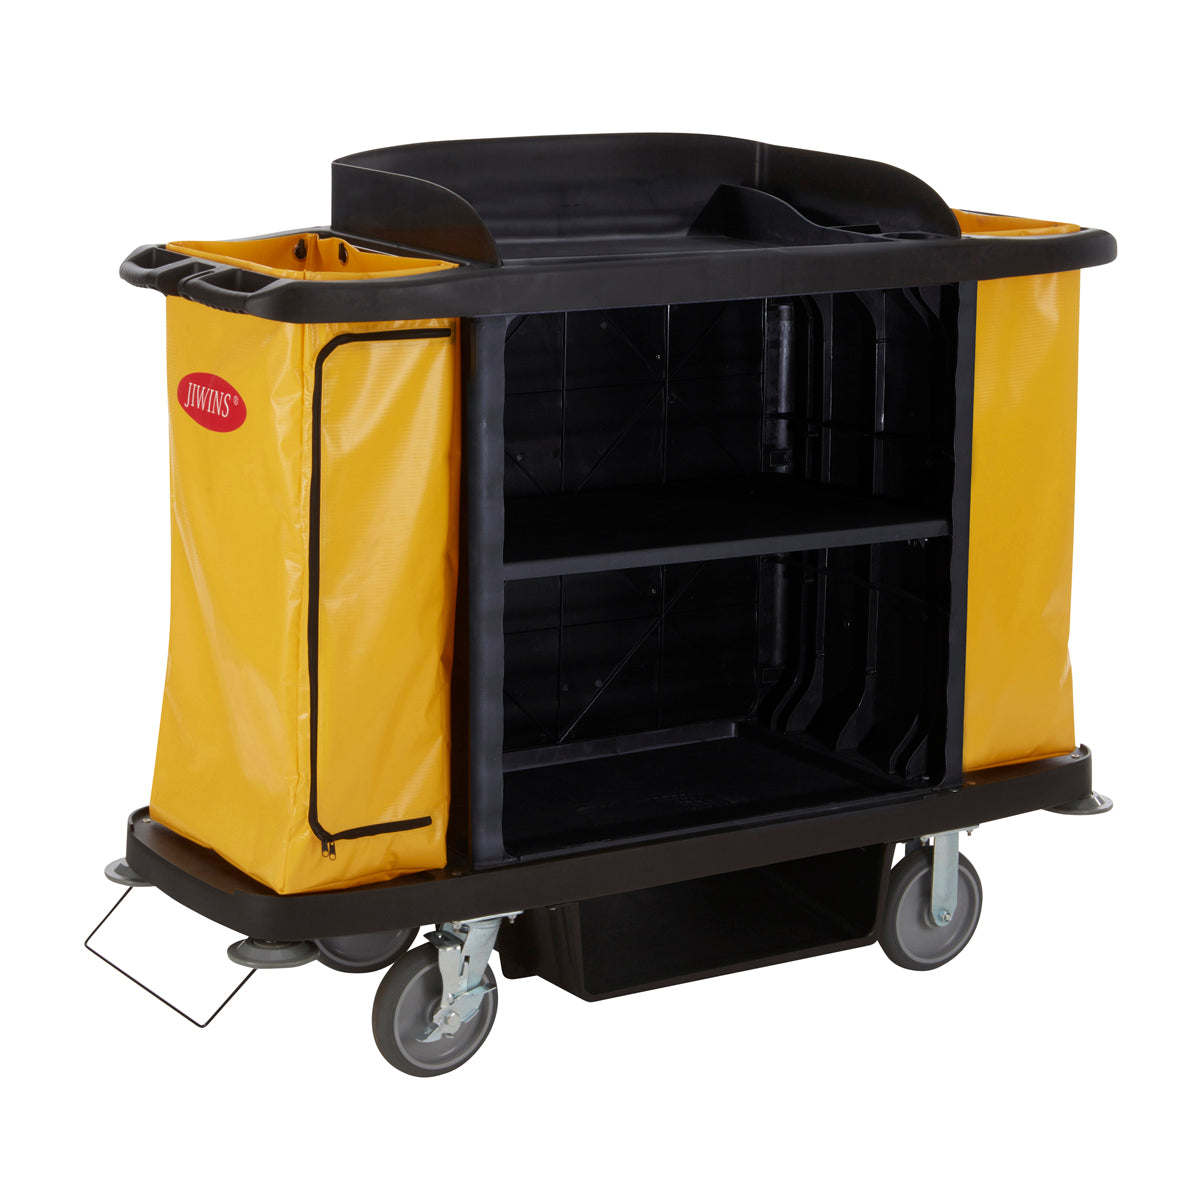 JW-HCC1 Jiwins Standard Housekeeping Cart Black 1536x554x1252mm Tomkin Australia Hospitality Supplies